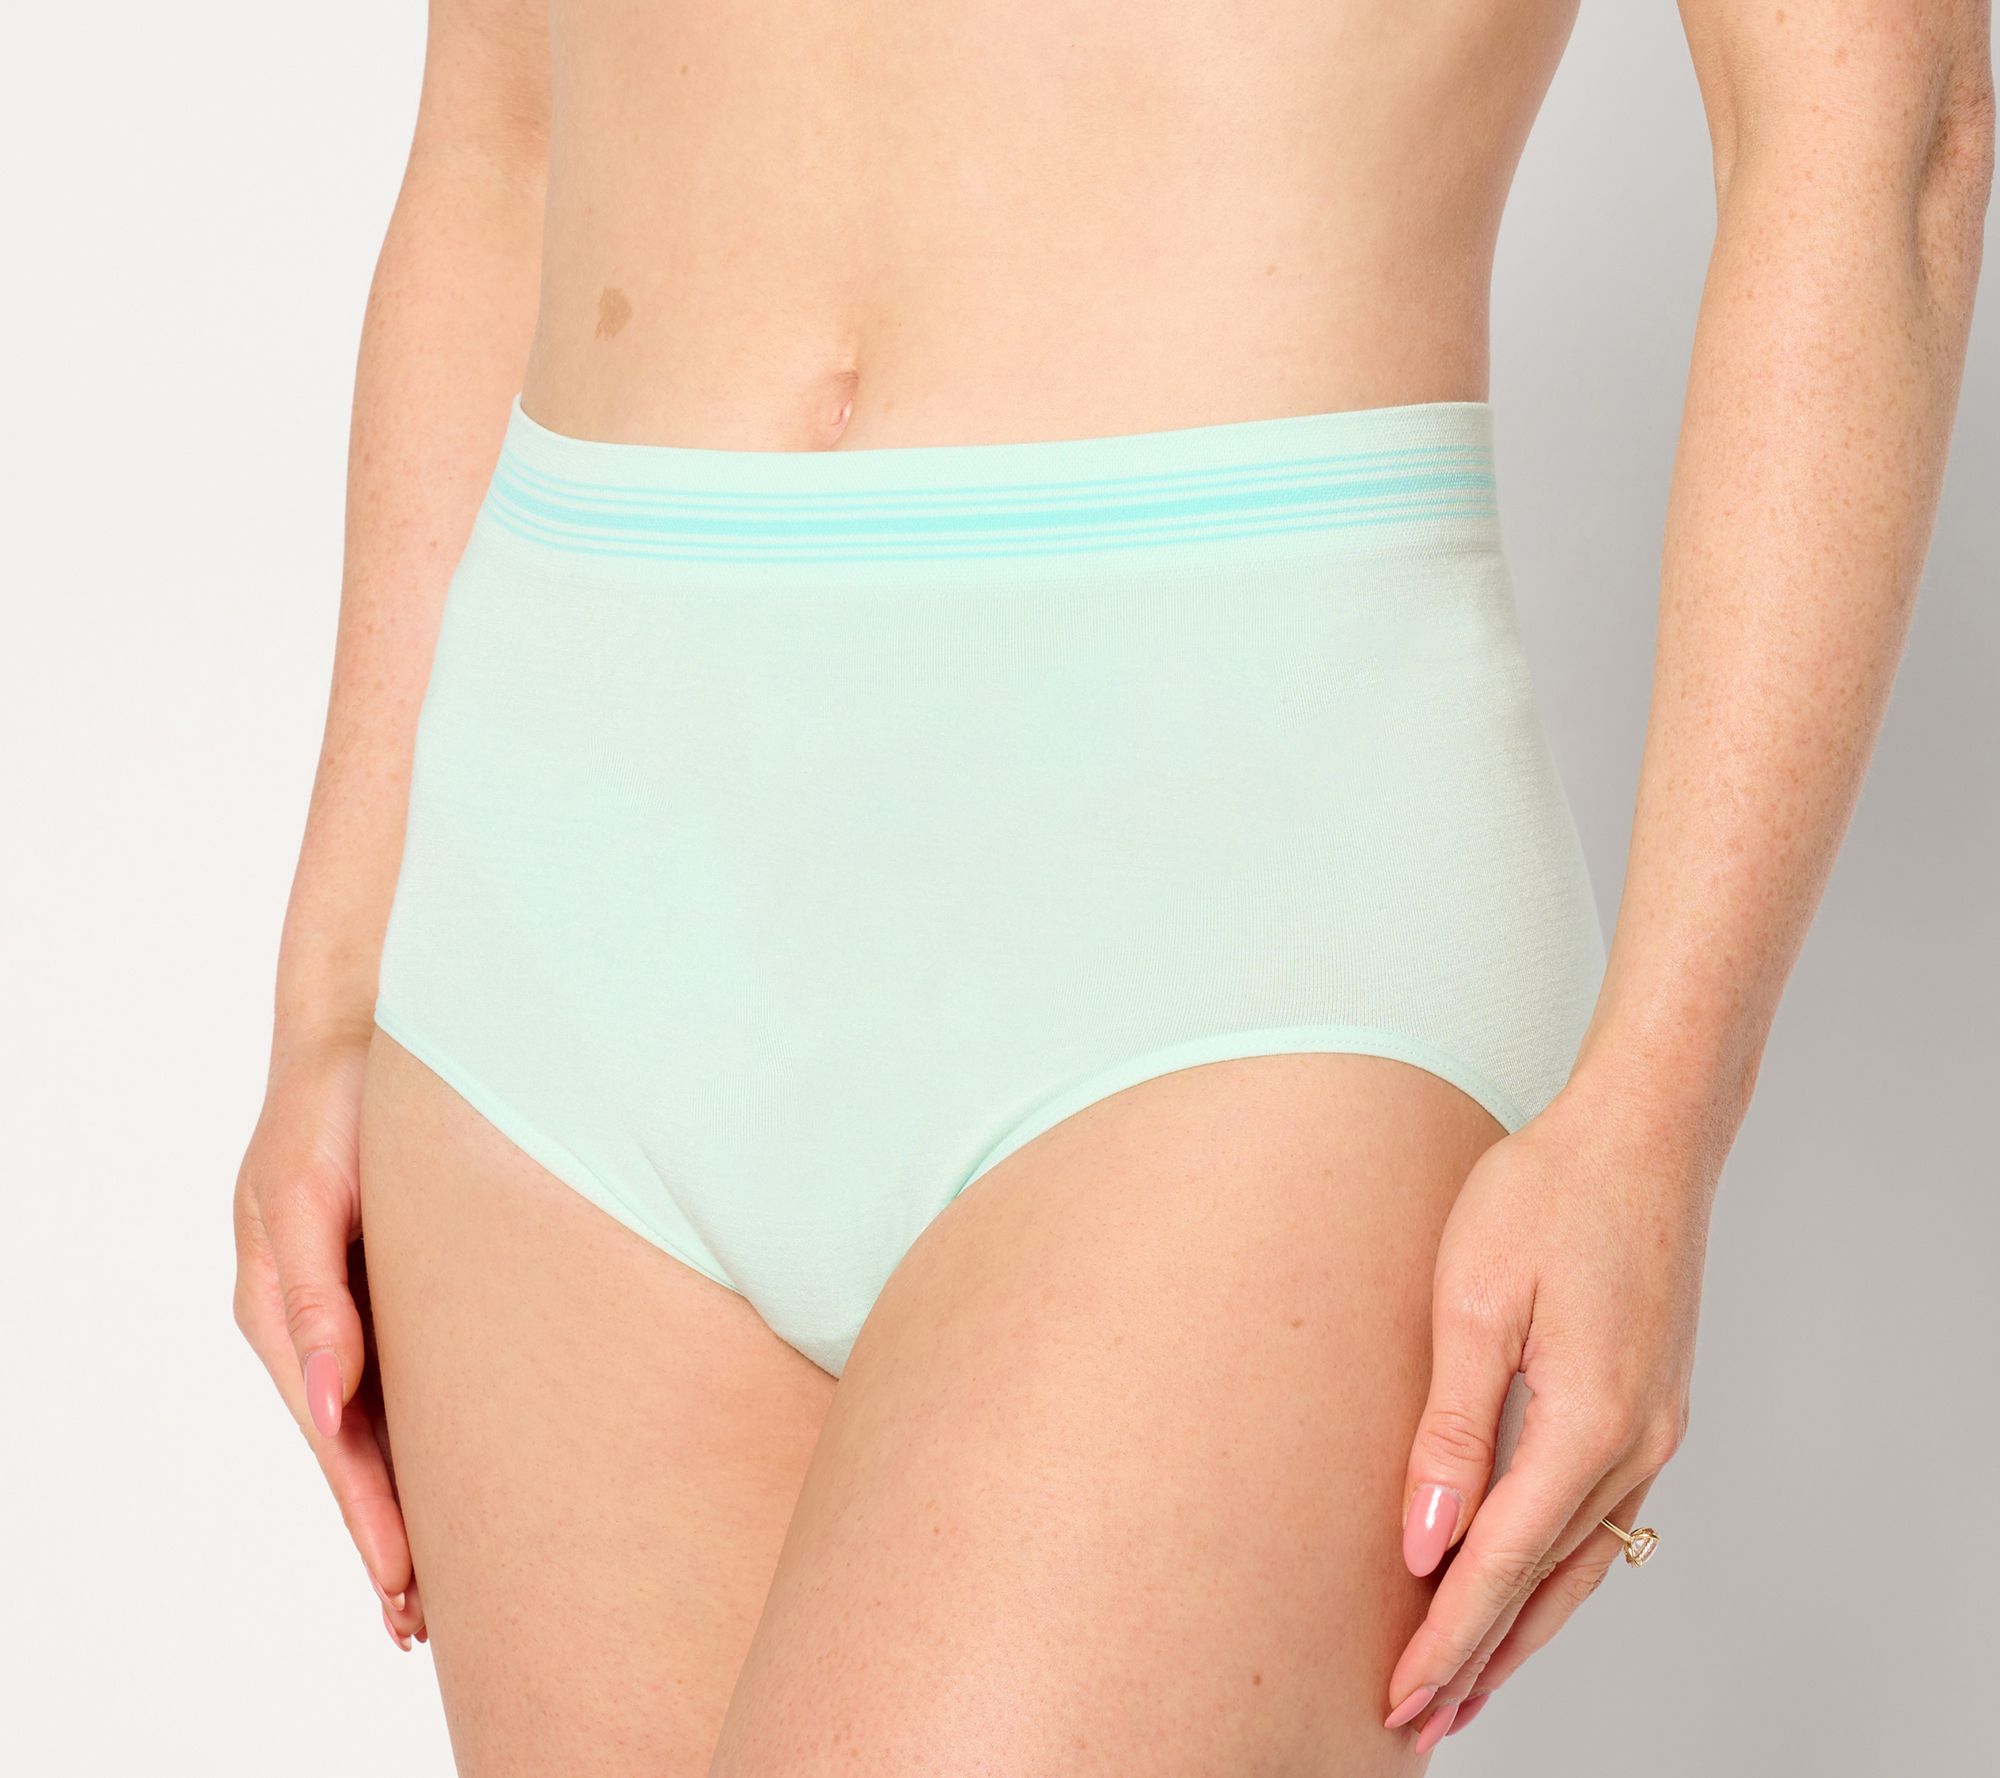 Vera high-waisted panties multi-pack white